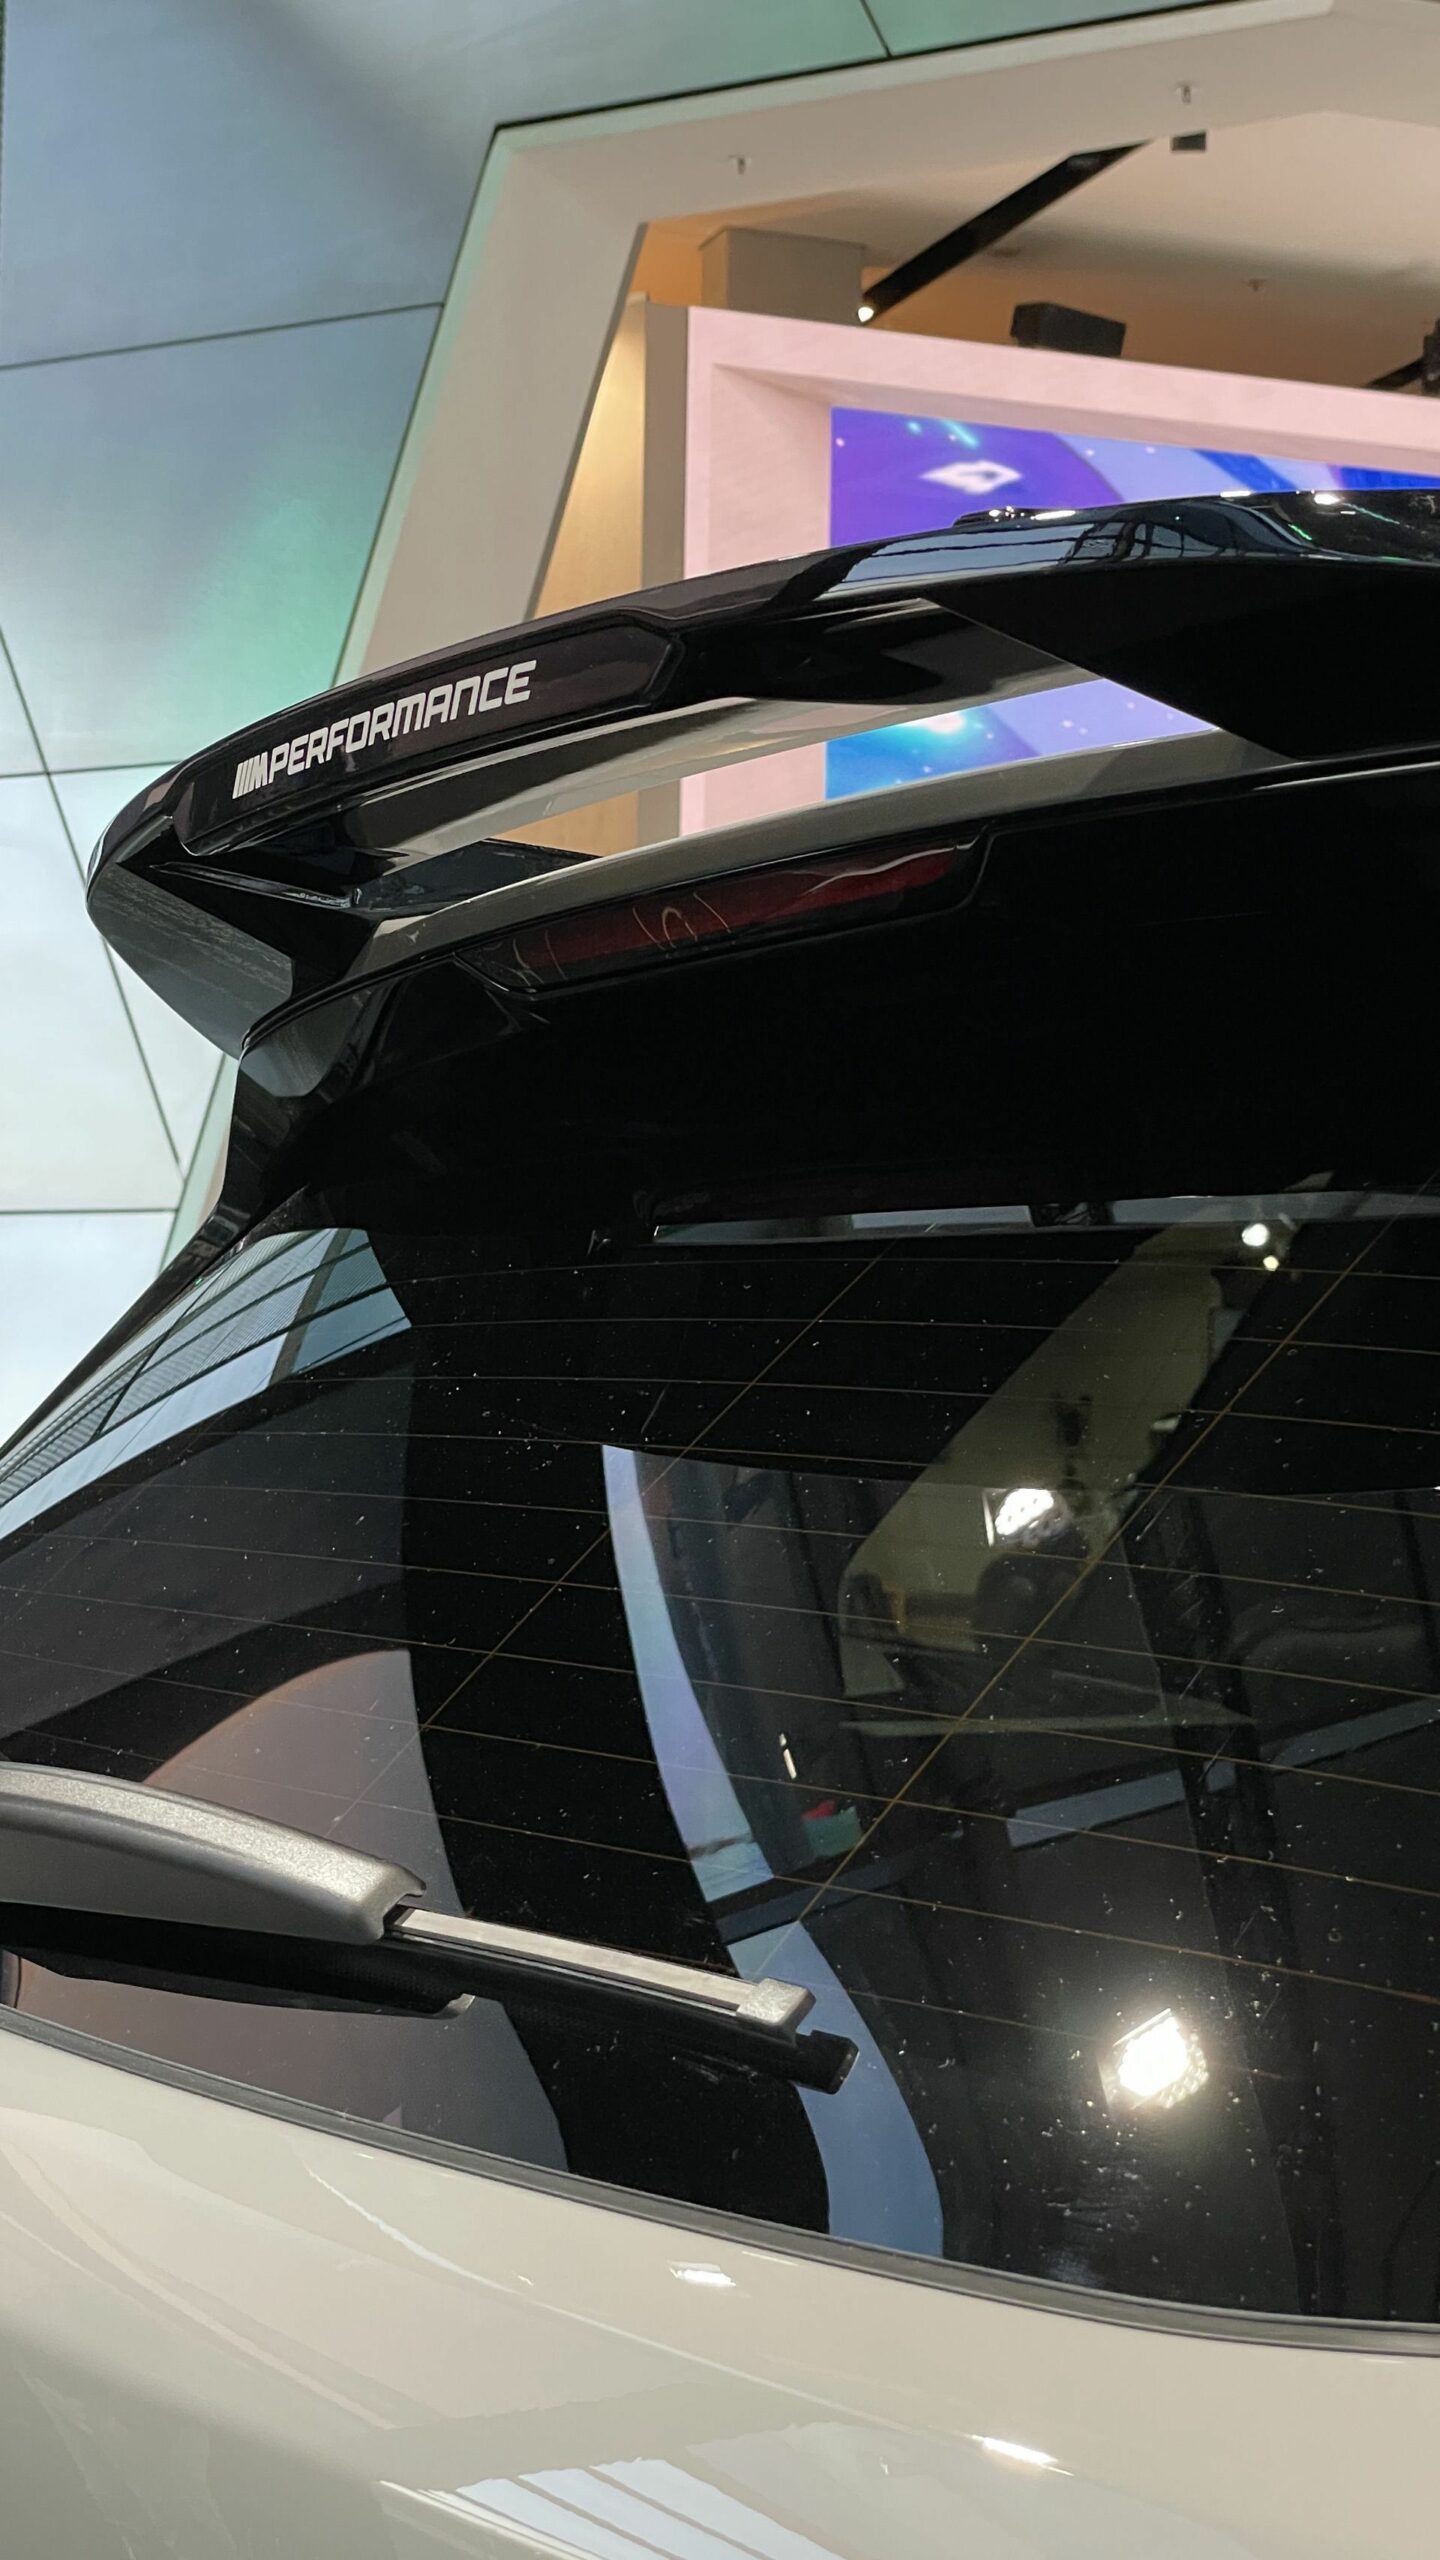 2024 BMW X5 in Nardo Grey with M Performance Parts